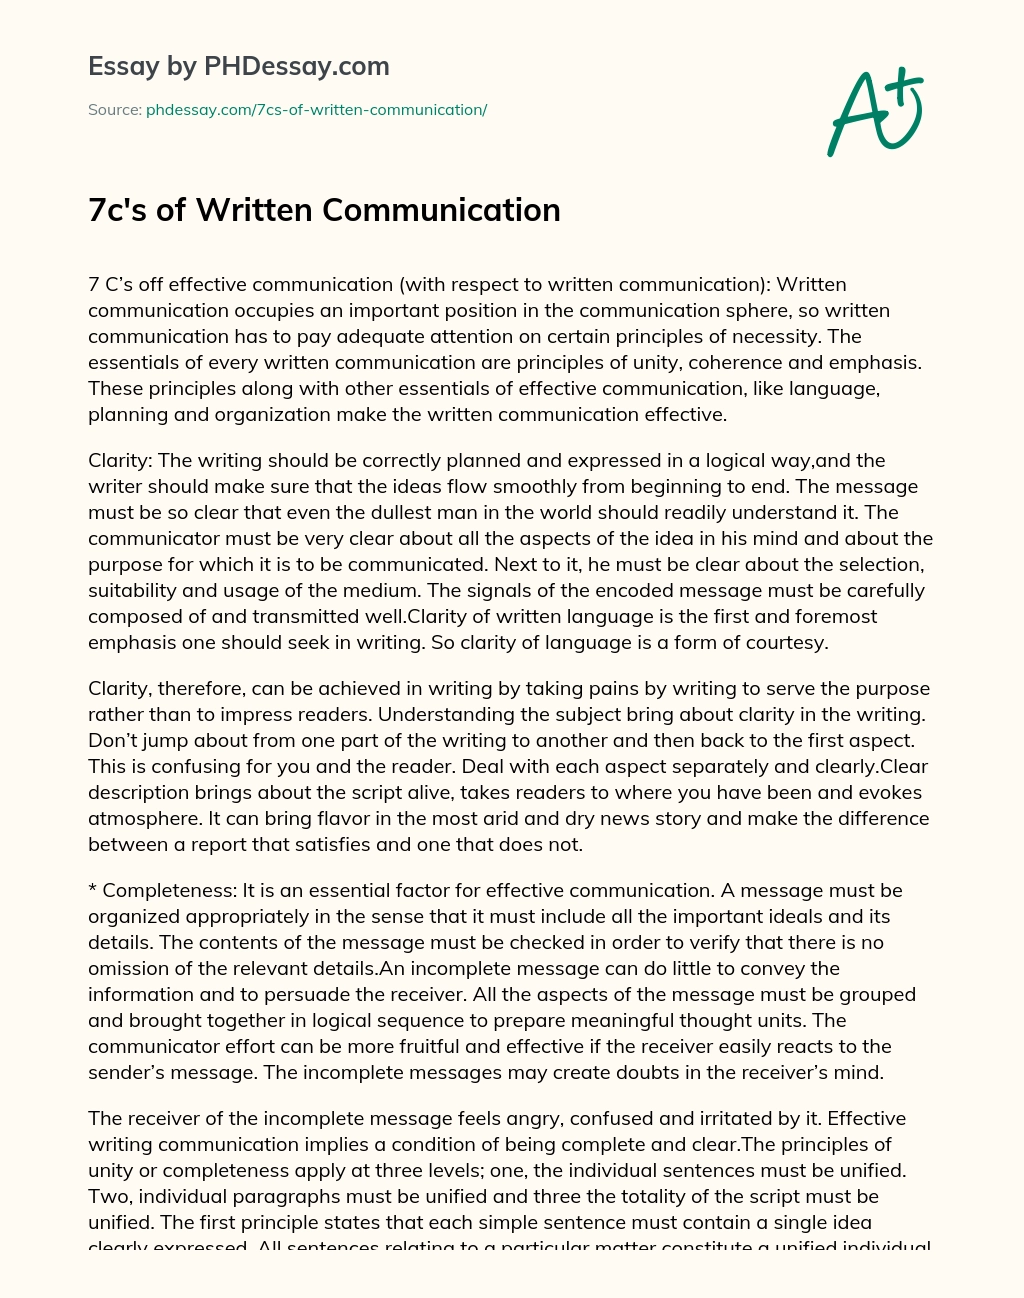 7c’s of Written Communication essay